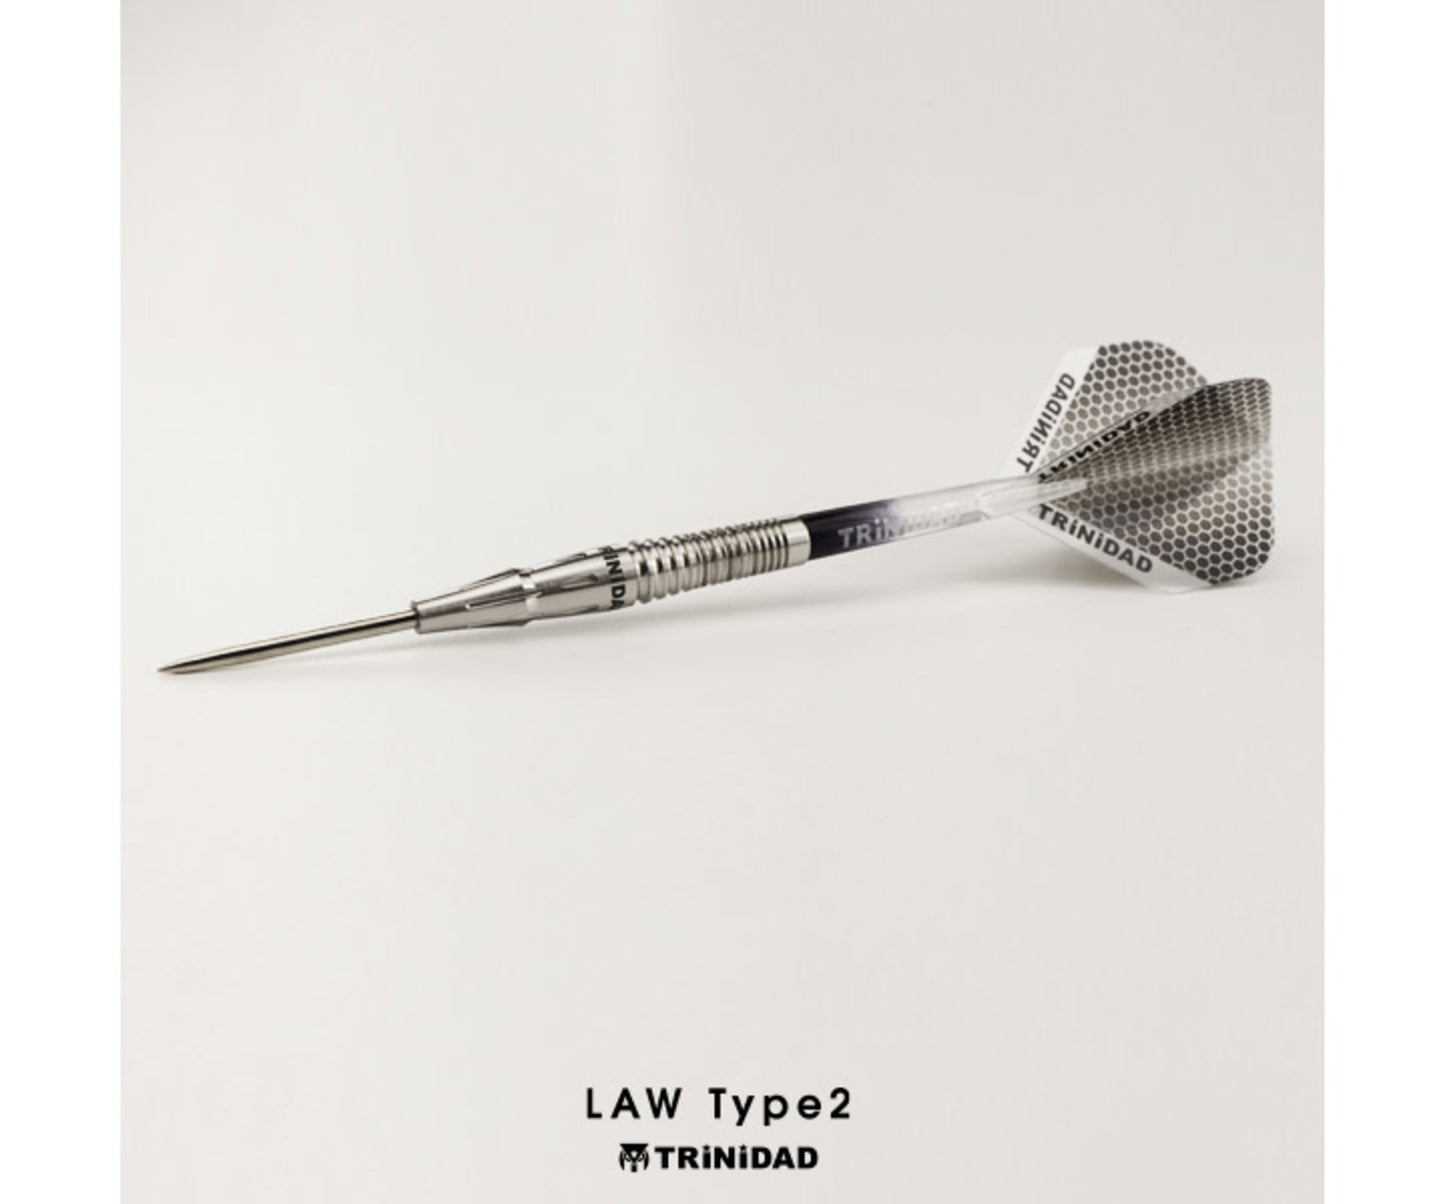 TRINIDAD - PRO SERIES - JAMES LAW - LAW TYPE 2 - 90% - 22.0g